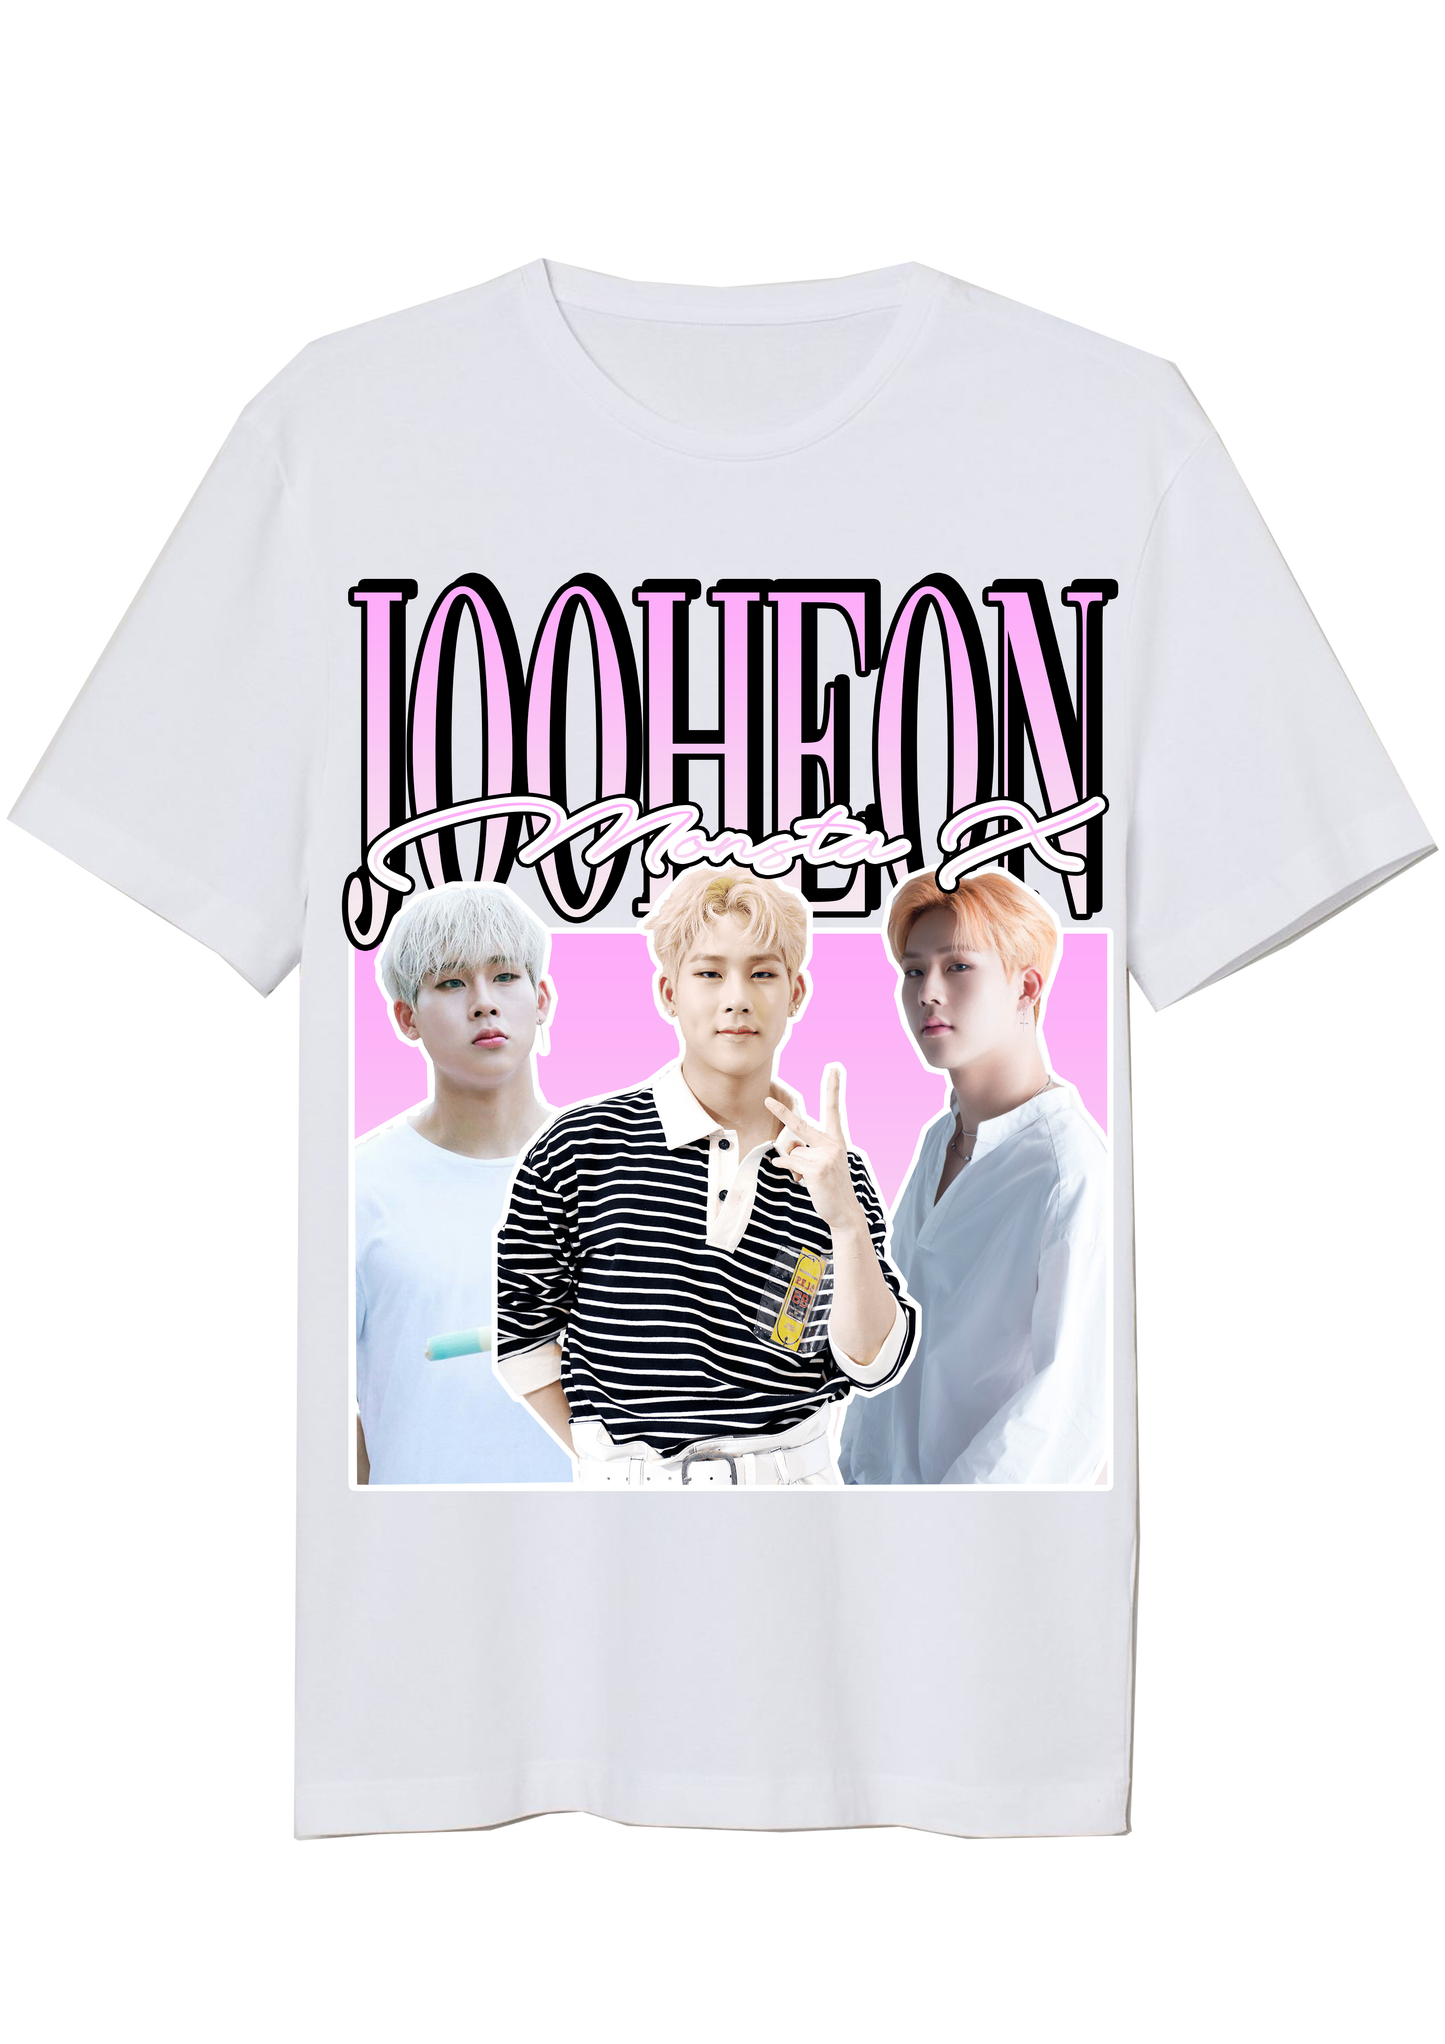 Jooheon of Monsta X Inspired Vintage T-Shirt